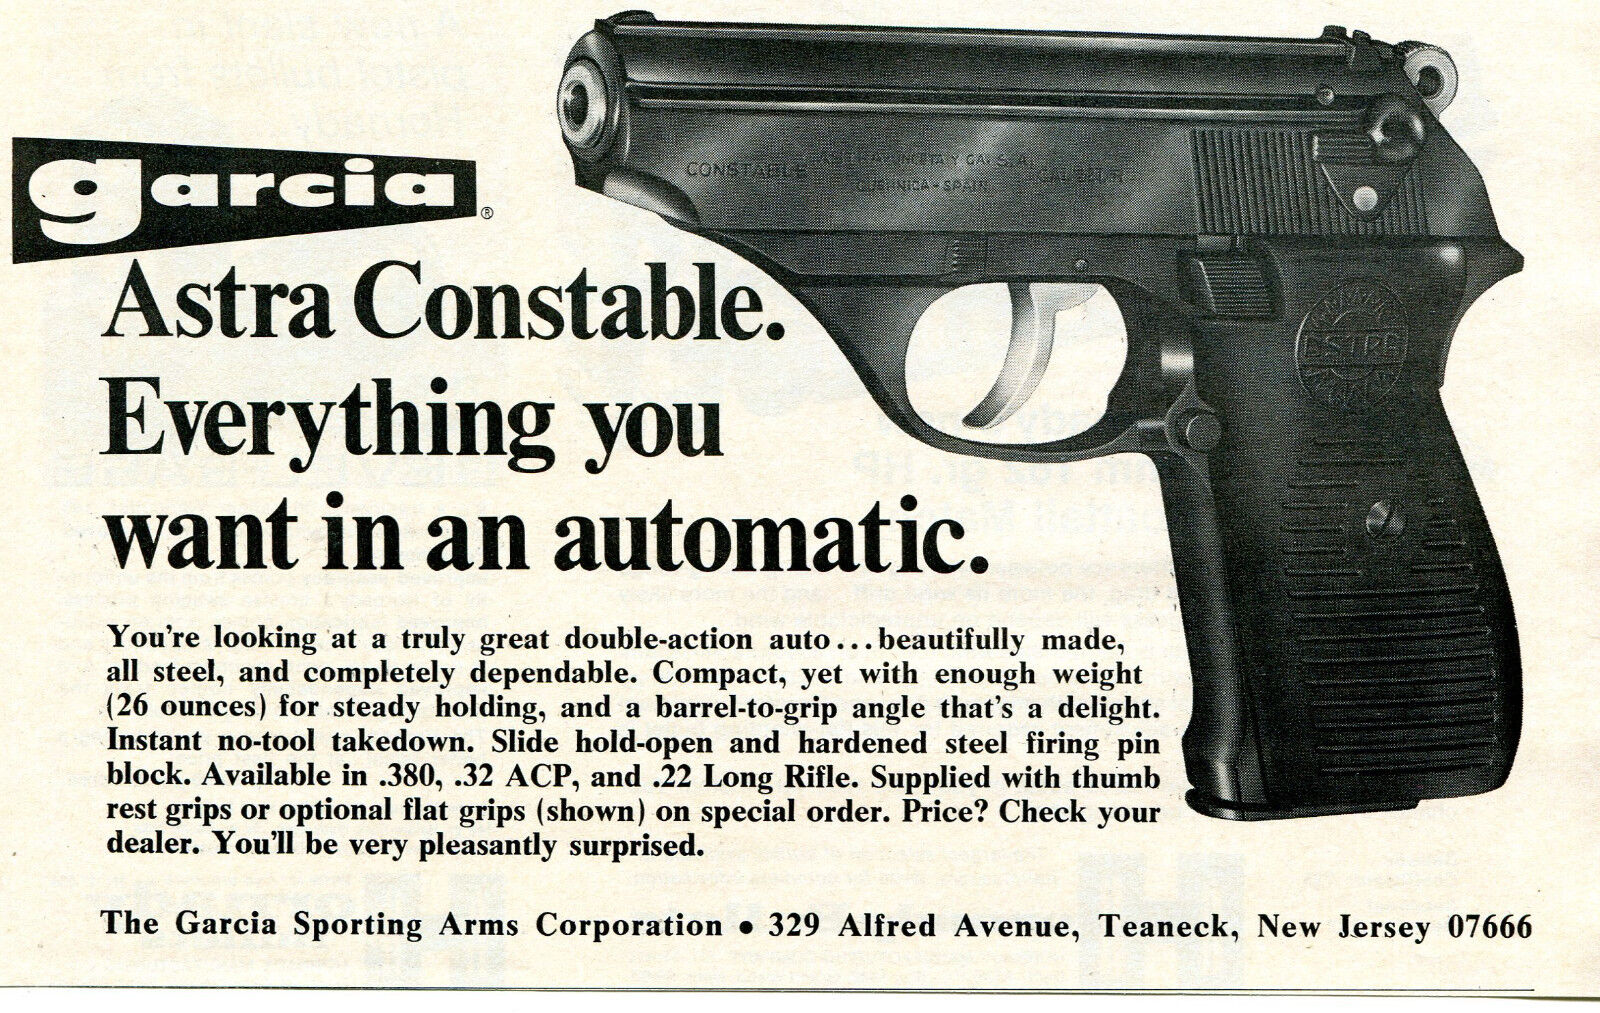 1973 Print Ad of Garcia Astra Constable .22LR Pistol